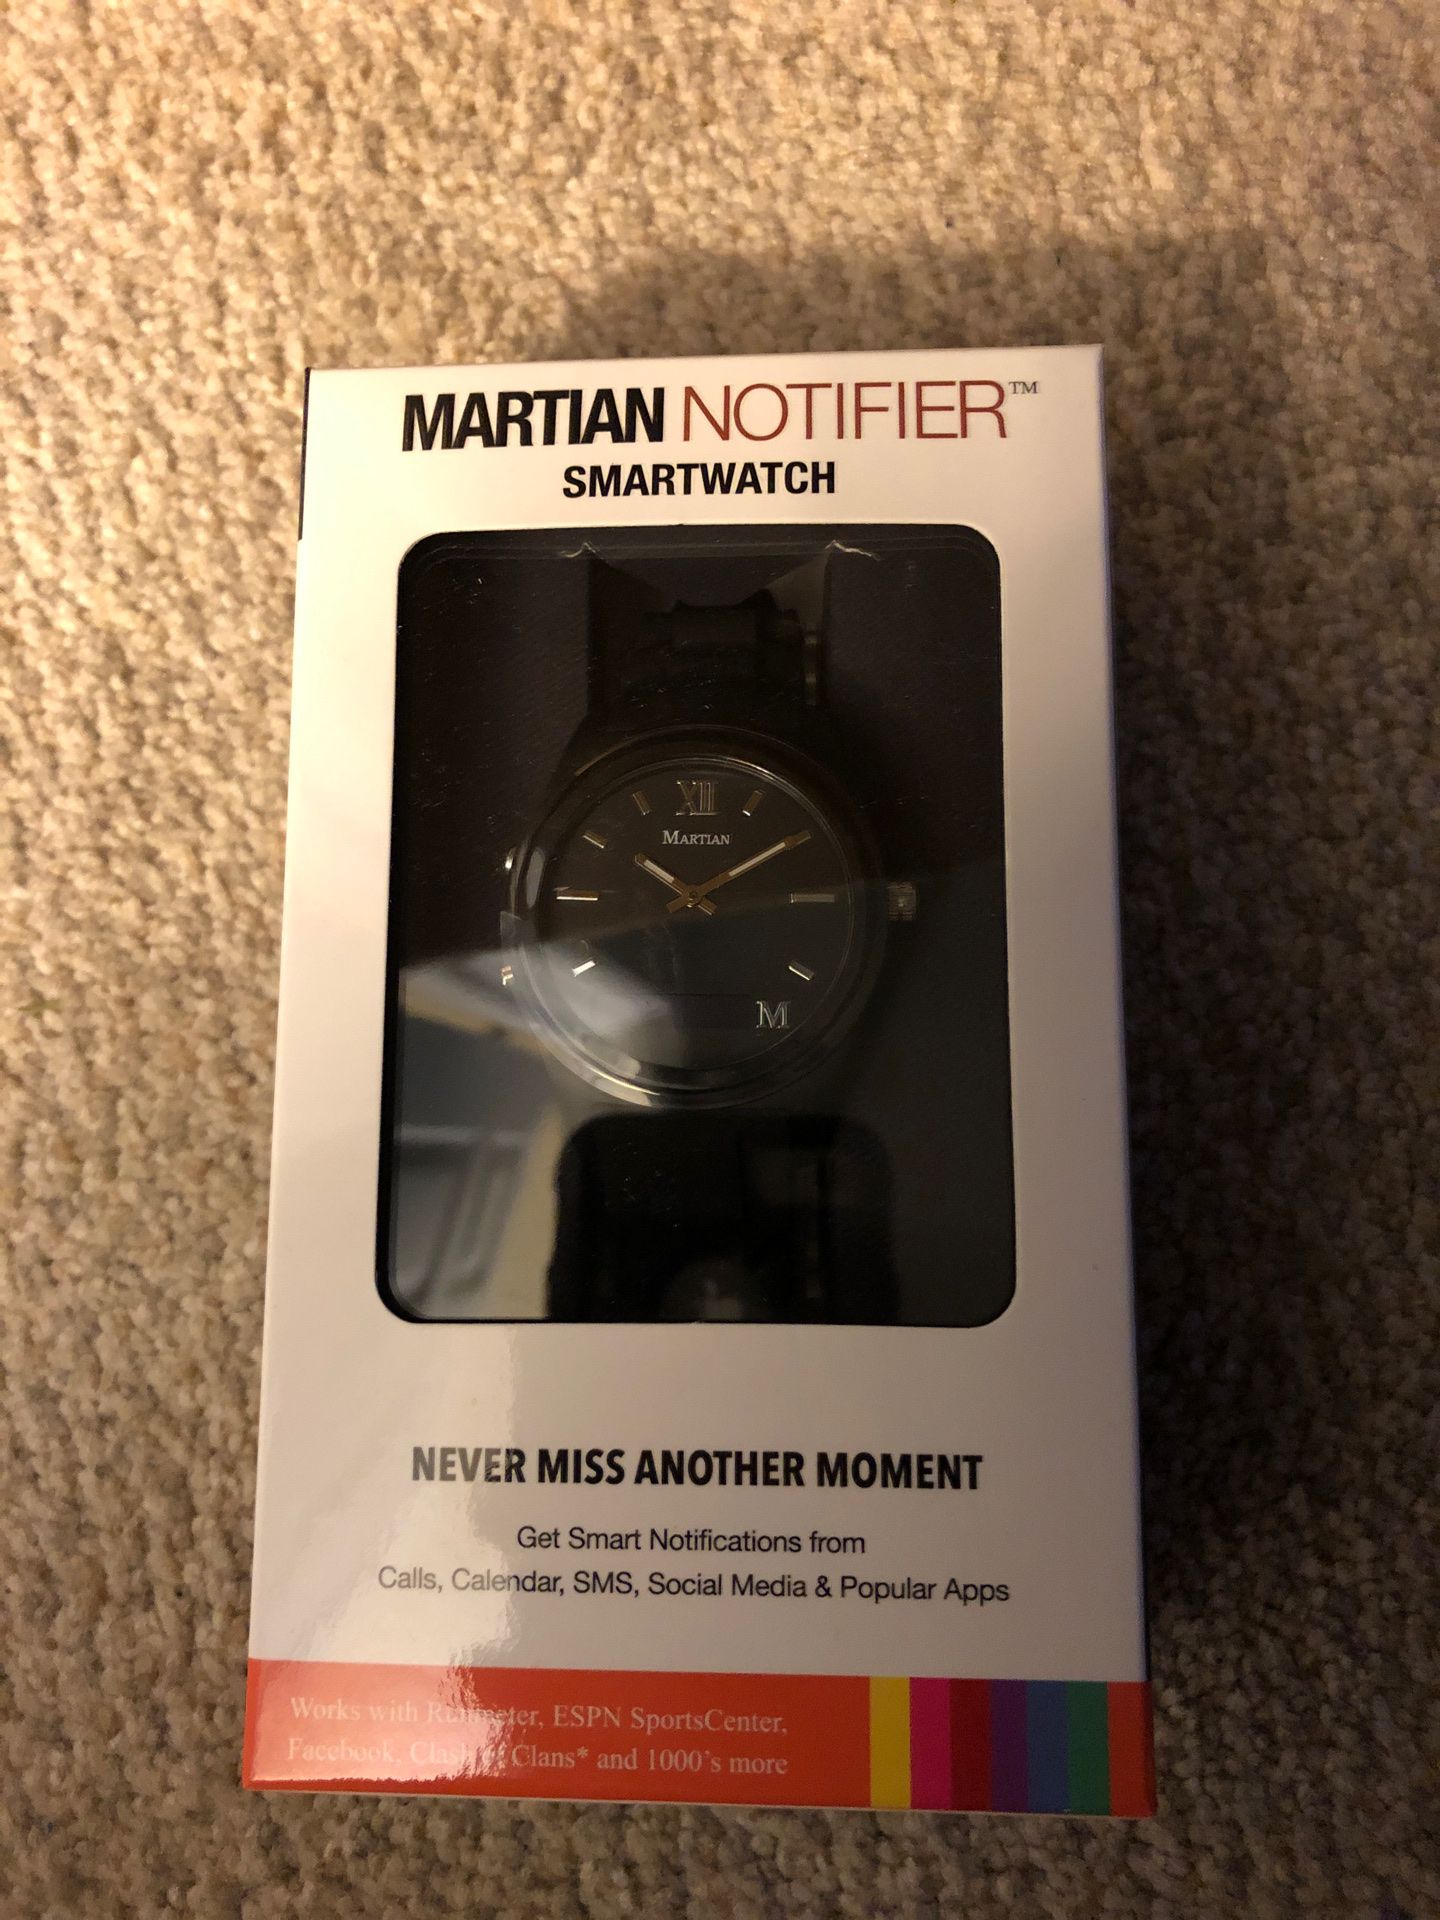 Martian Notifier smartwatch